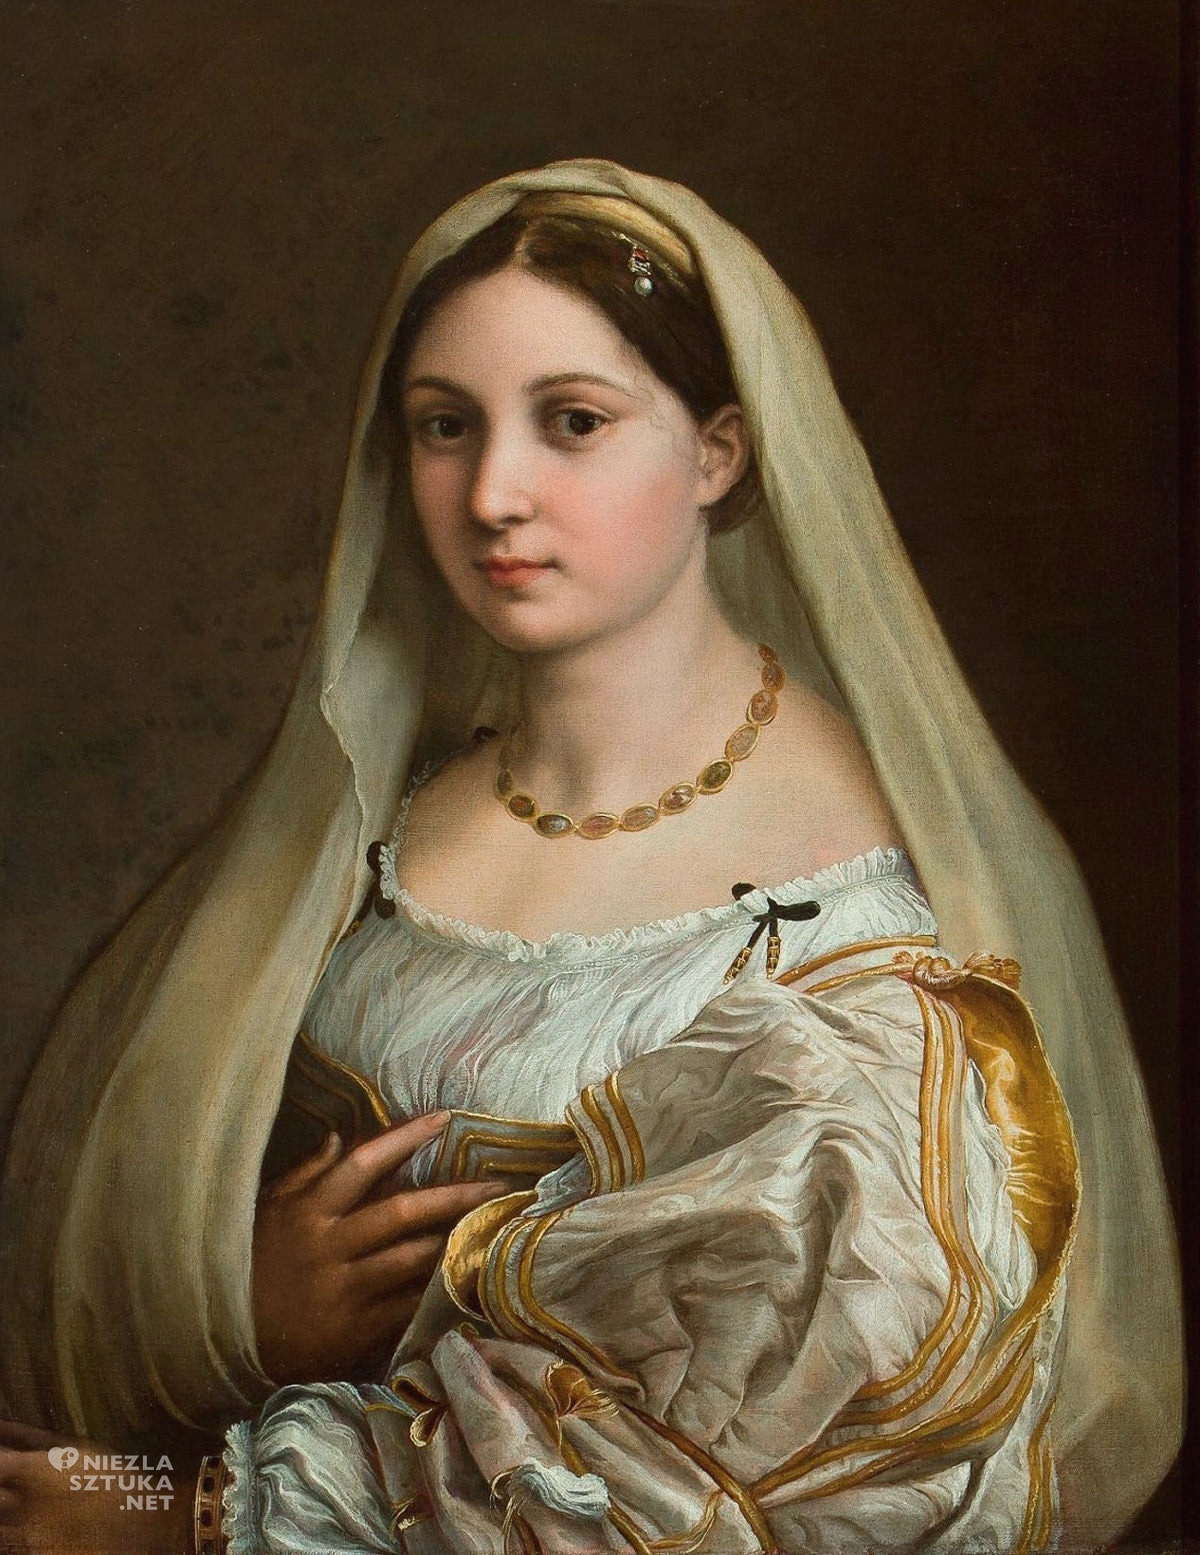 Rafael, La velata, La donna velata, portret kobiety, kobieta z welonem, sztuka włoska, Margherita Luti, niezła sztuka